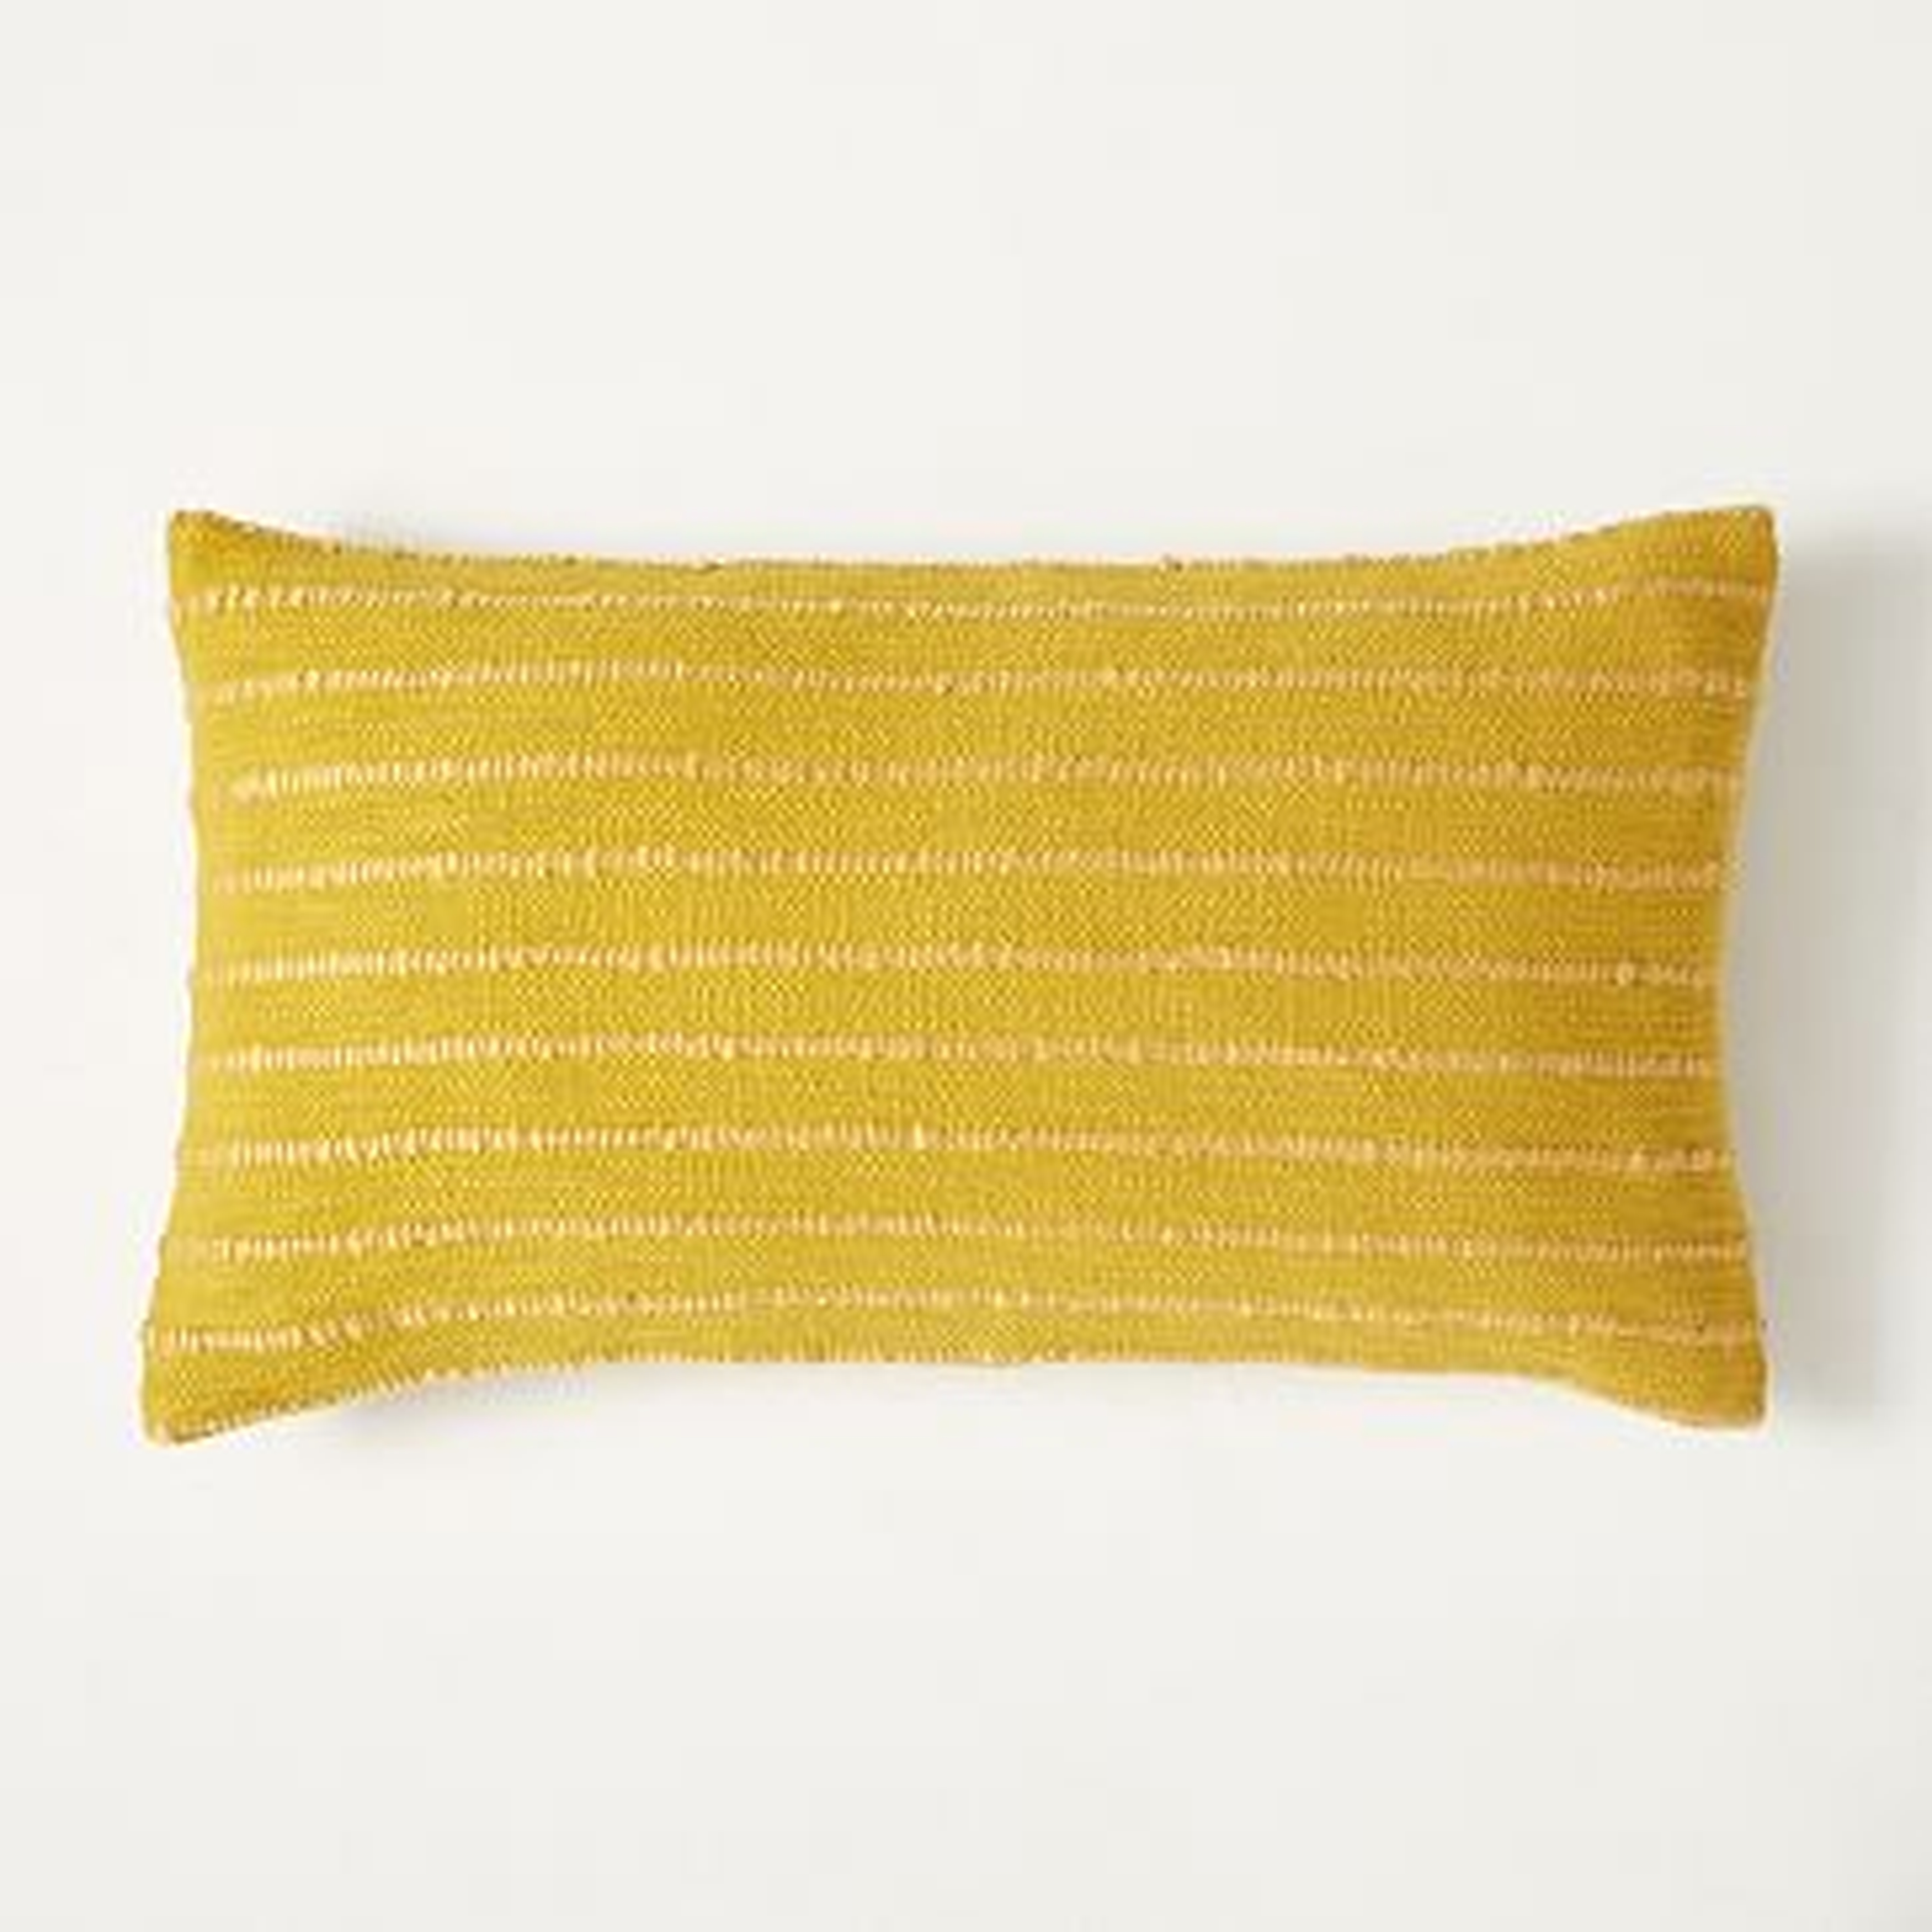 Soft Corded Pillow Cover, 14"x26", Dark Horseradish - West Elm